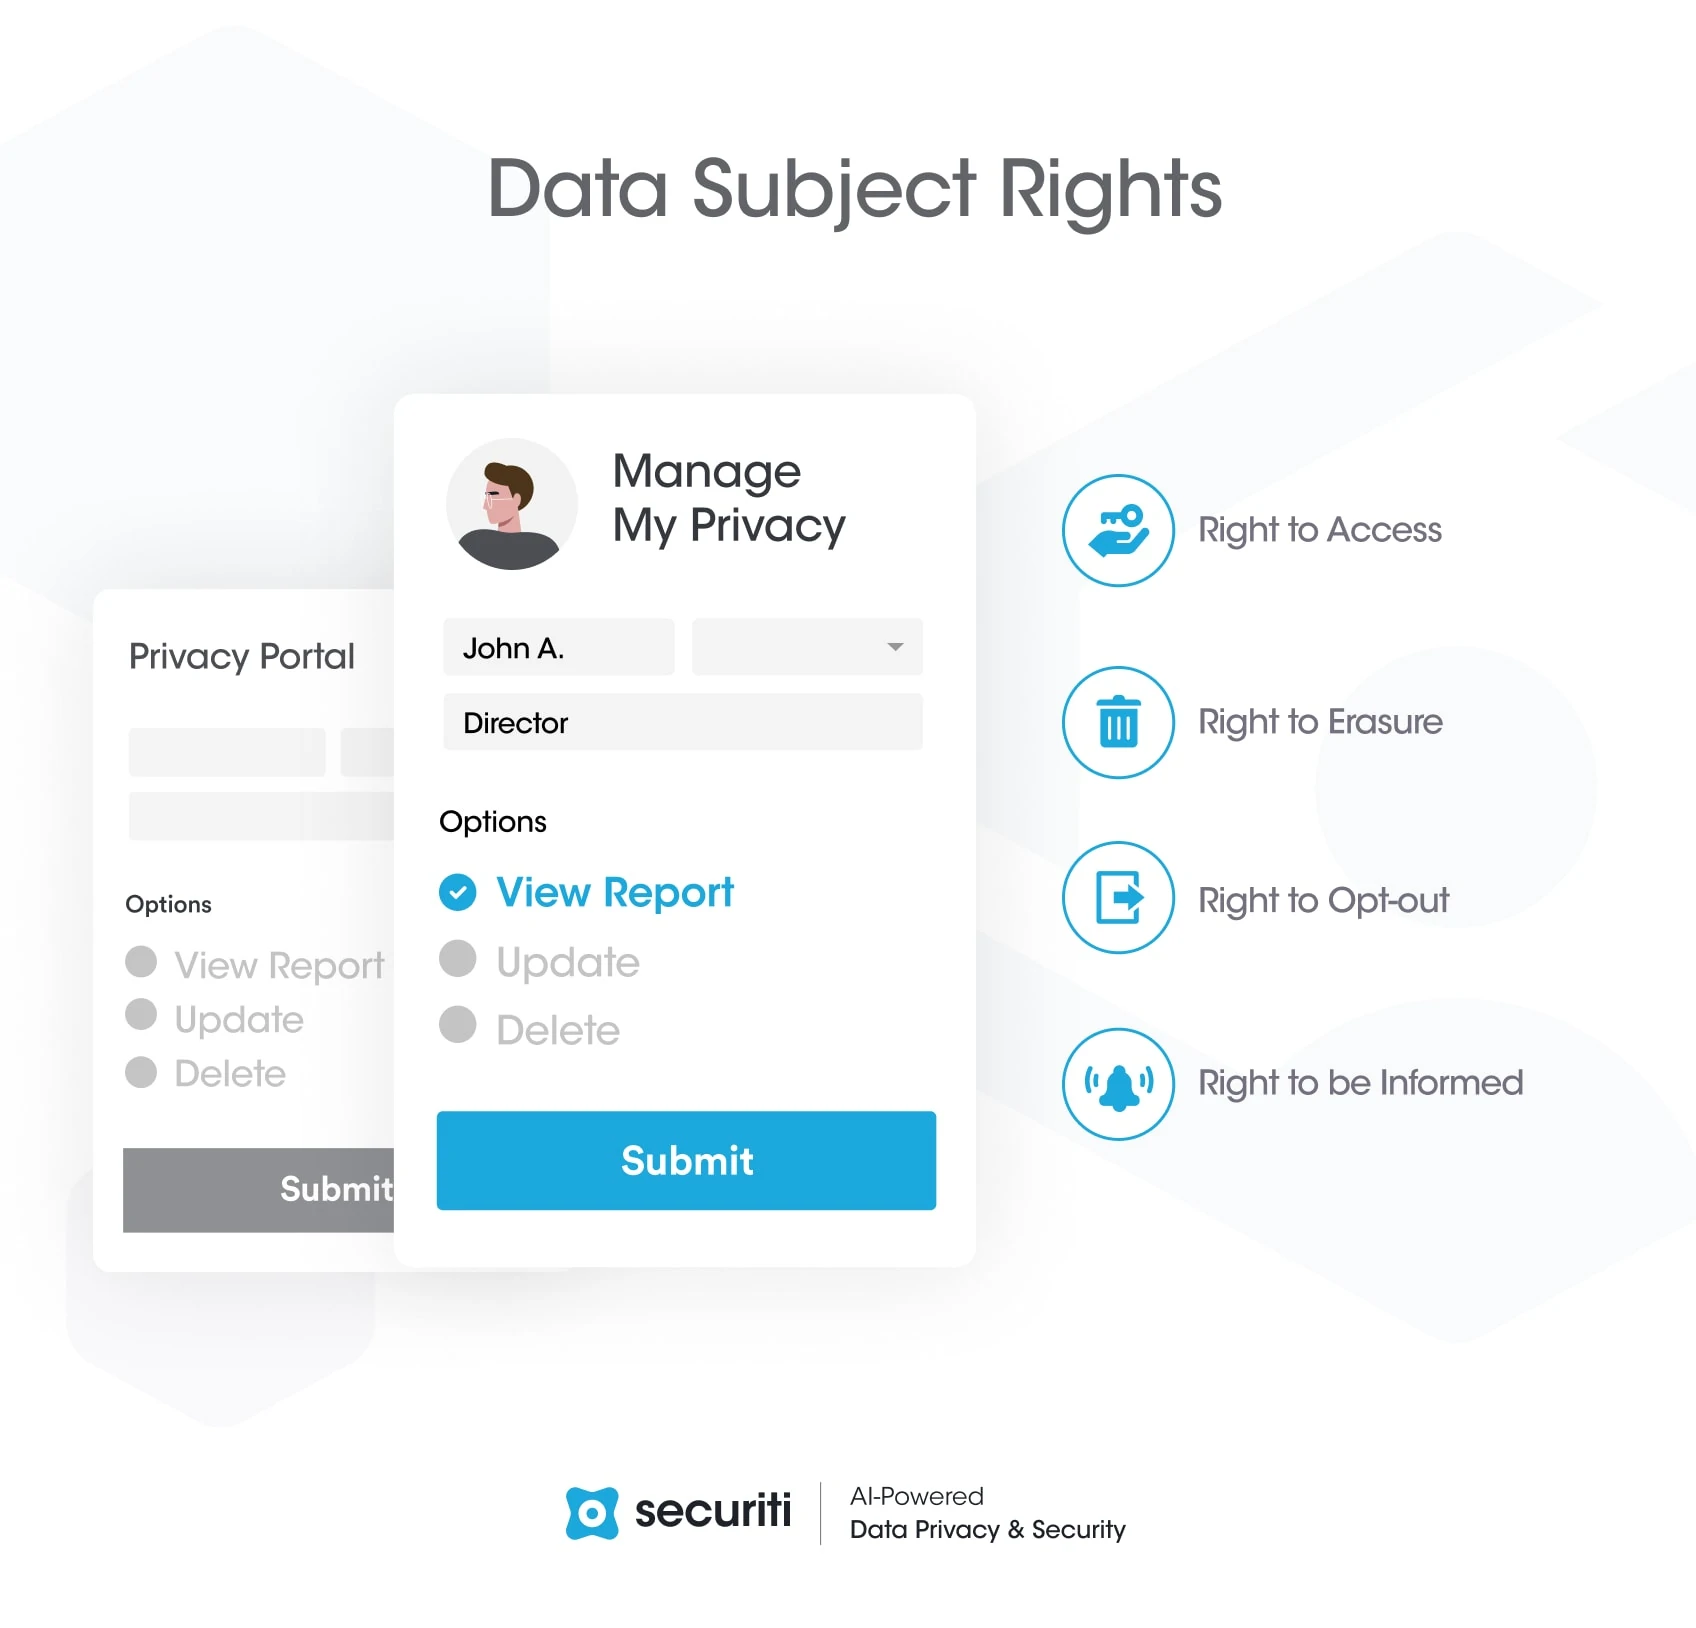 Data subject rights